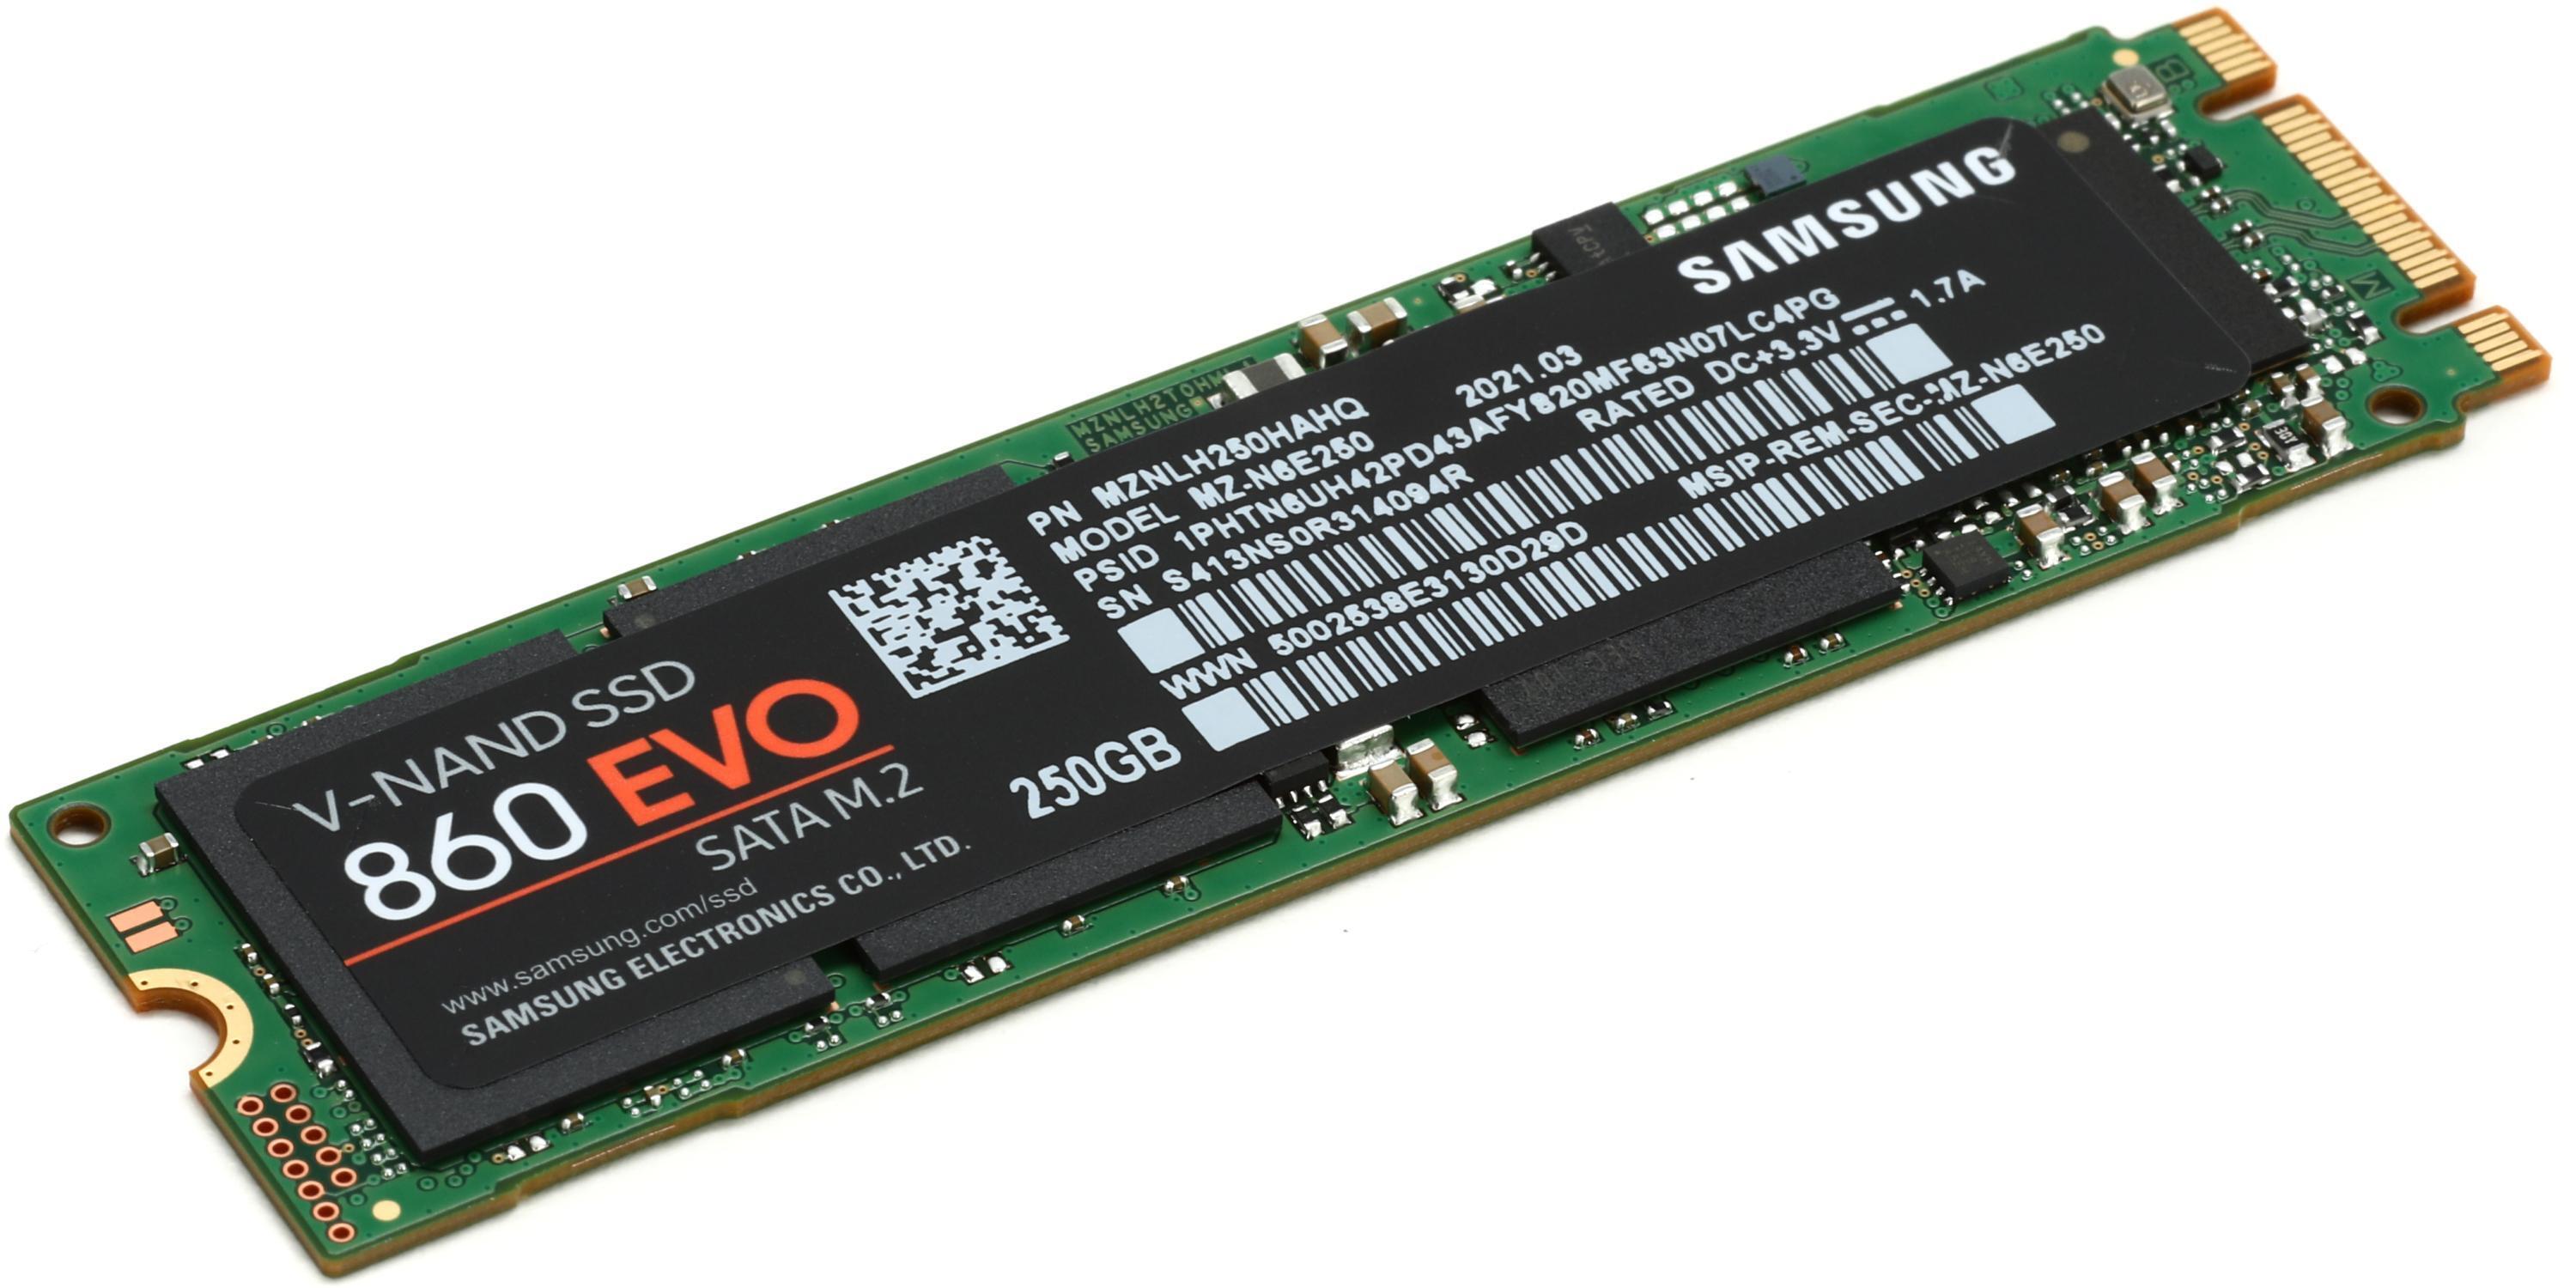 Samsung 860 EVO 250GB Solid State Drive M.2 2280 Internal - SATA